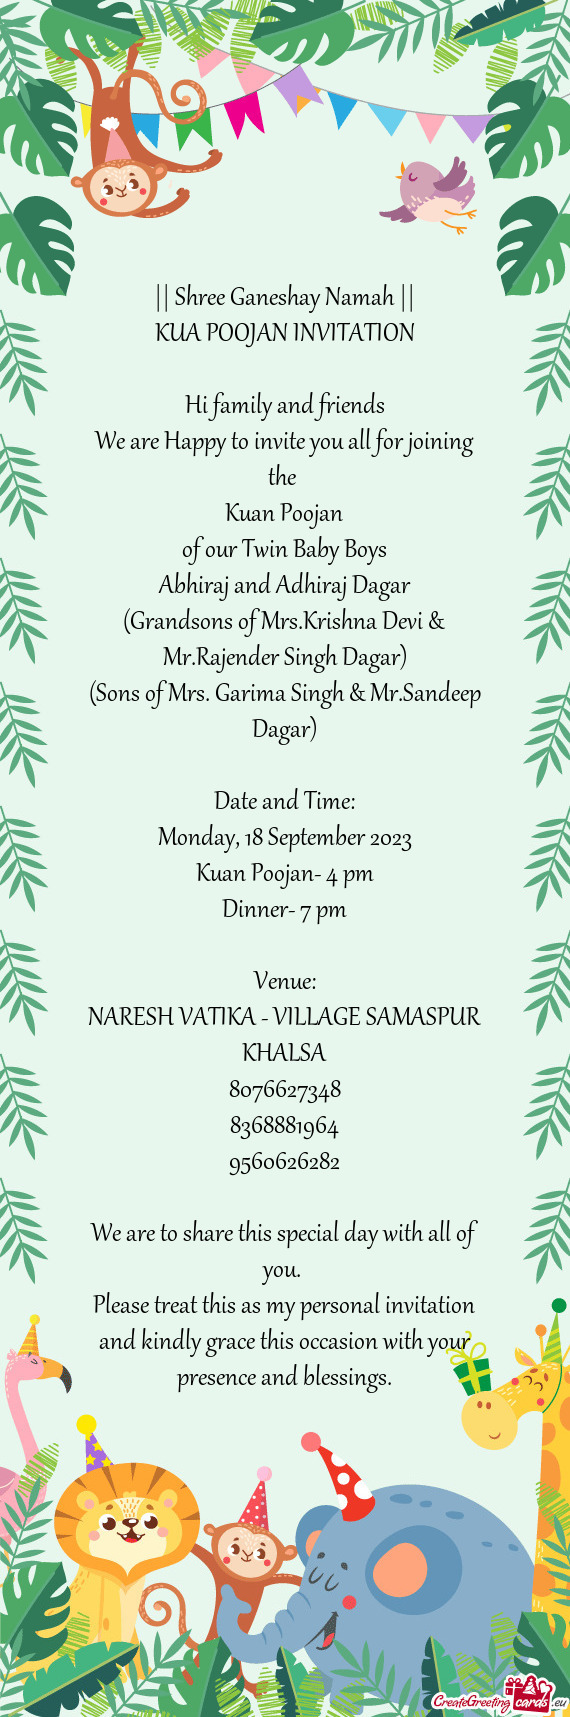 (Sons of Mrs. Garima Singh & Mr.Sandeep Dagar)